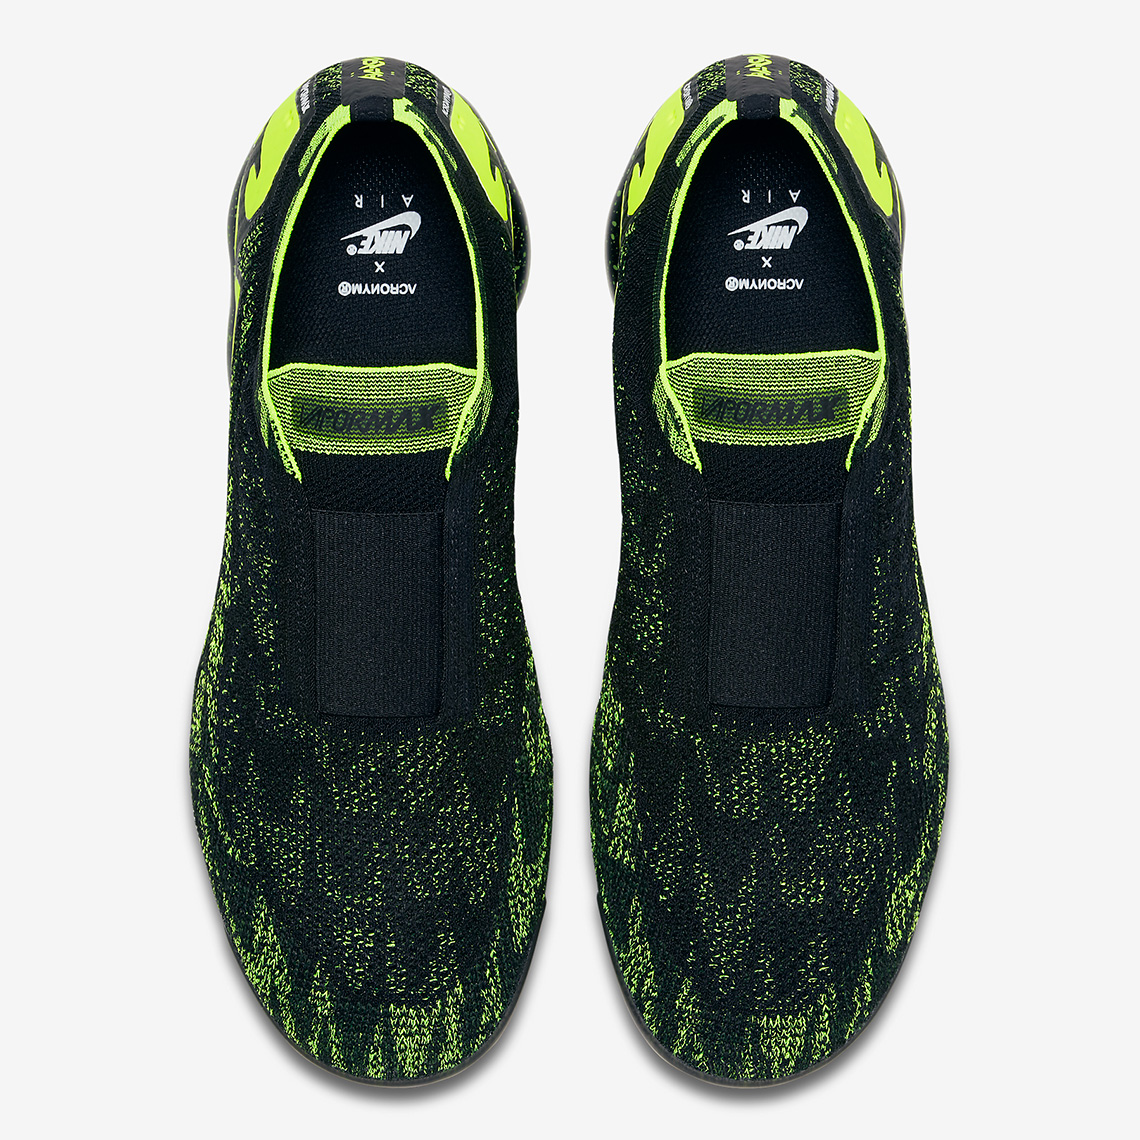 Acronym Nike Vapormax Blackvolt Release Info 6